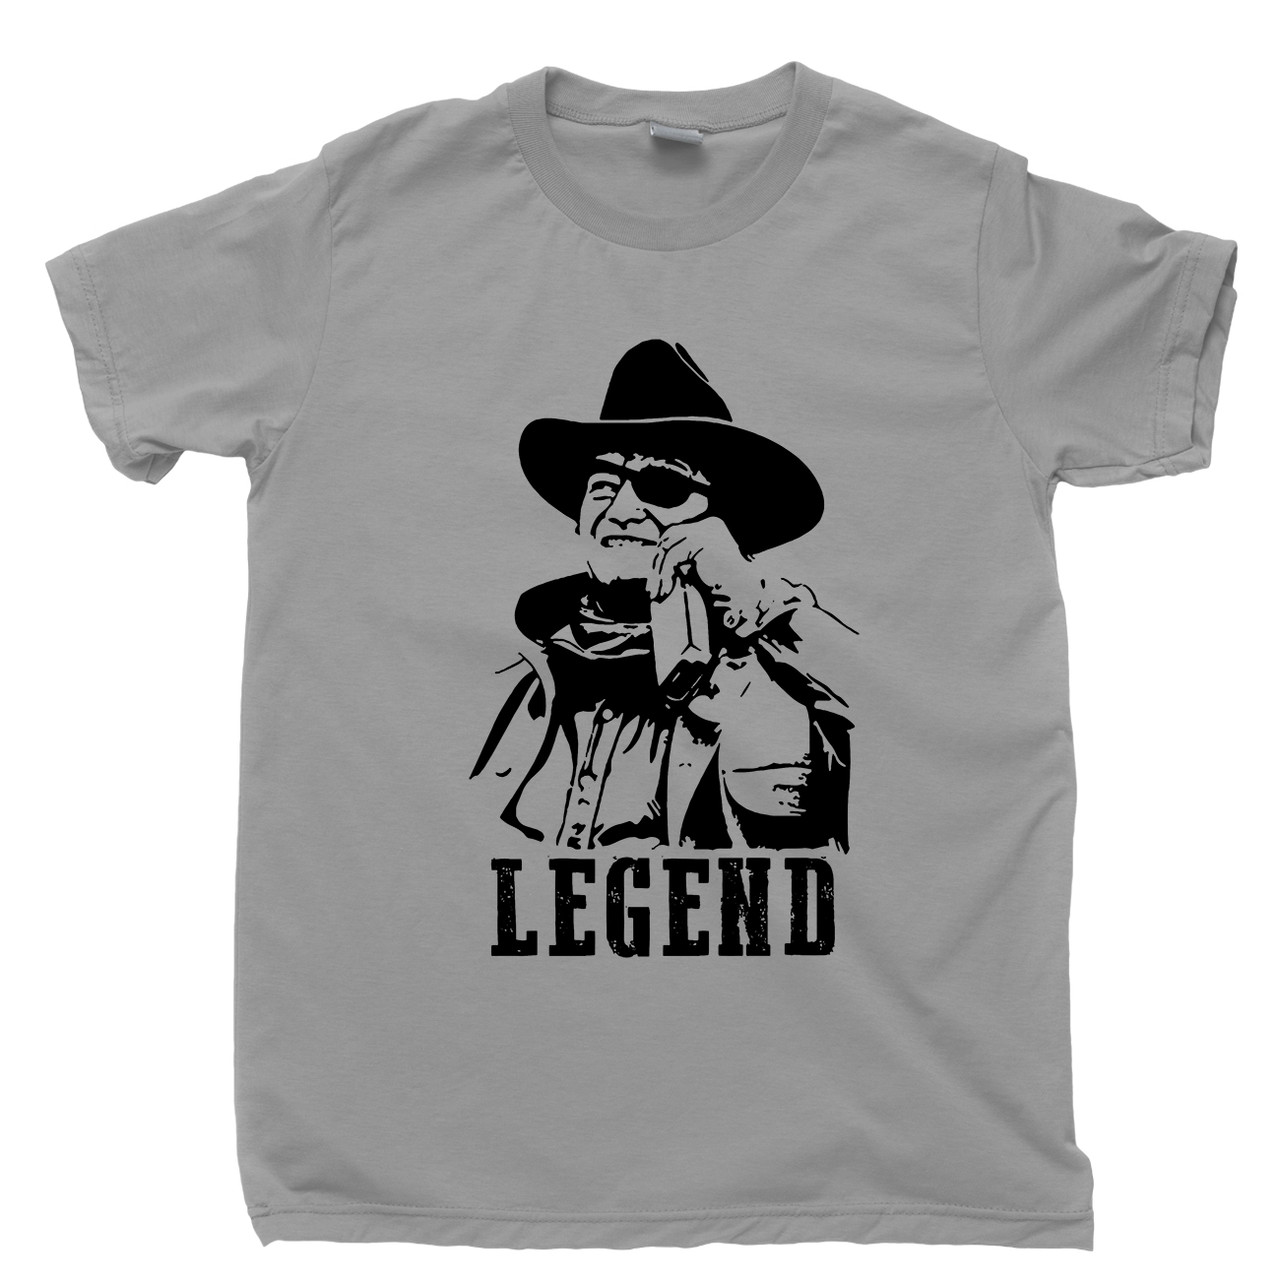 John Wayne Legend T Shirt - The Duke, True Grit, Rooster Cogburn, Cowboy,  Spaghetti Western Movies Tee